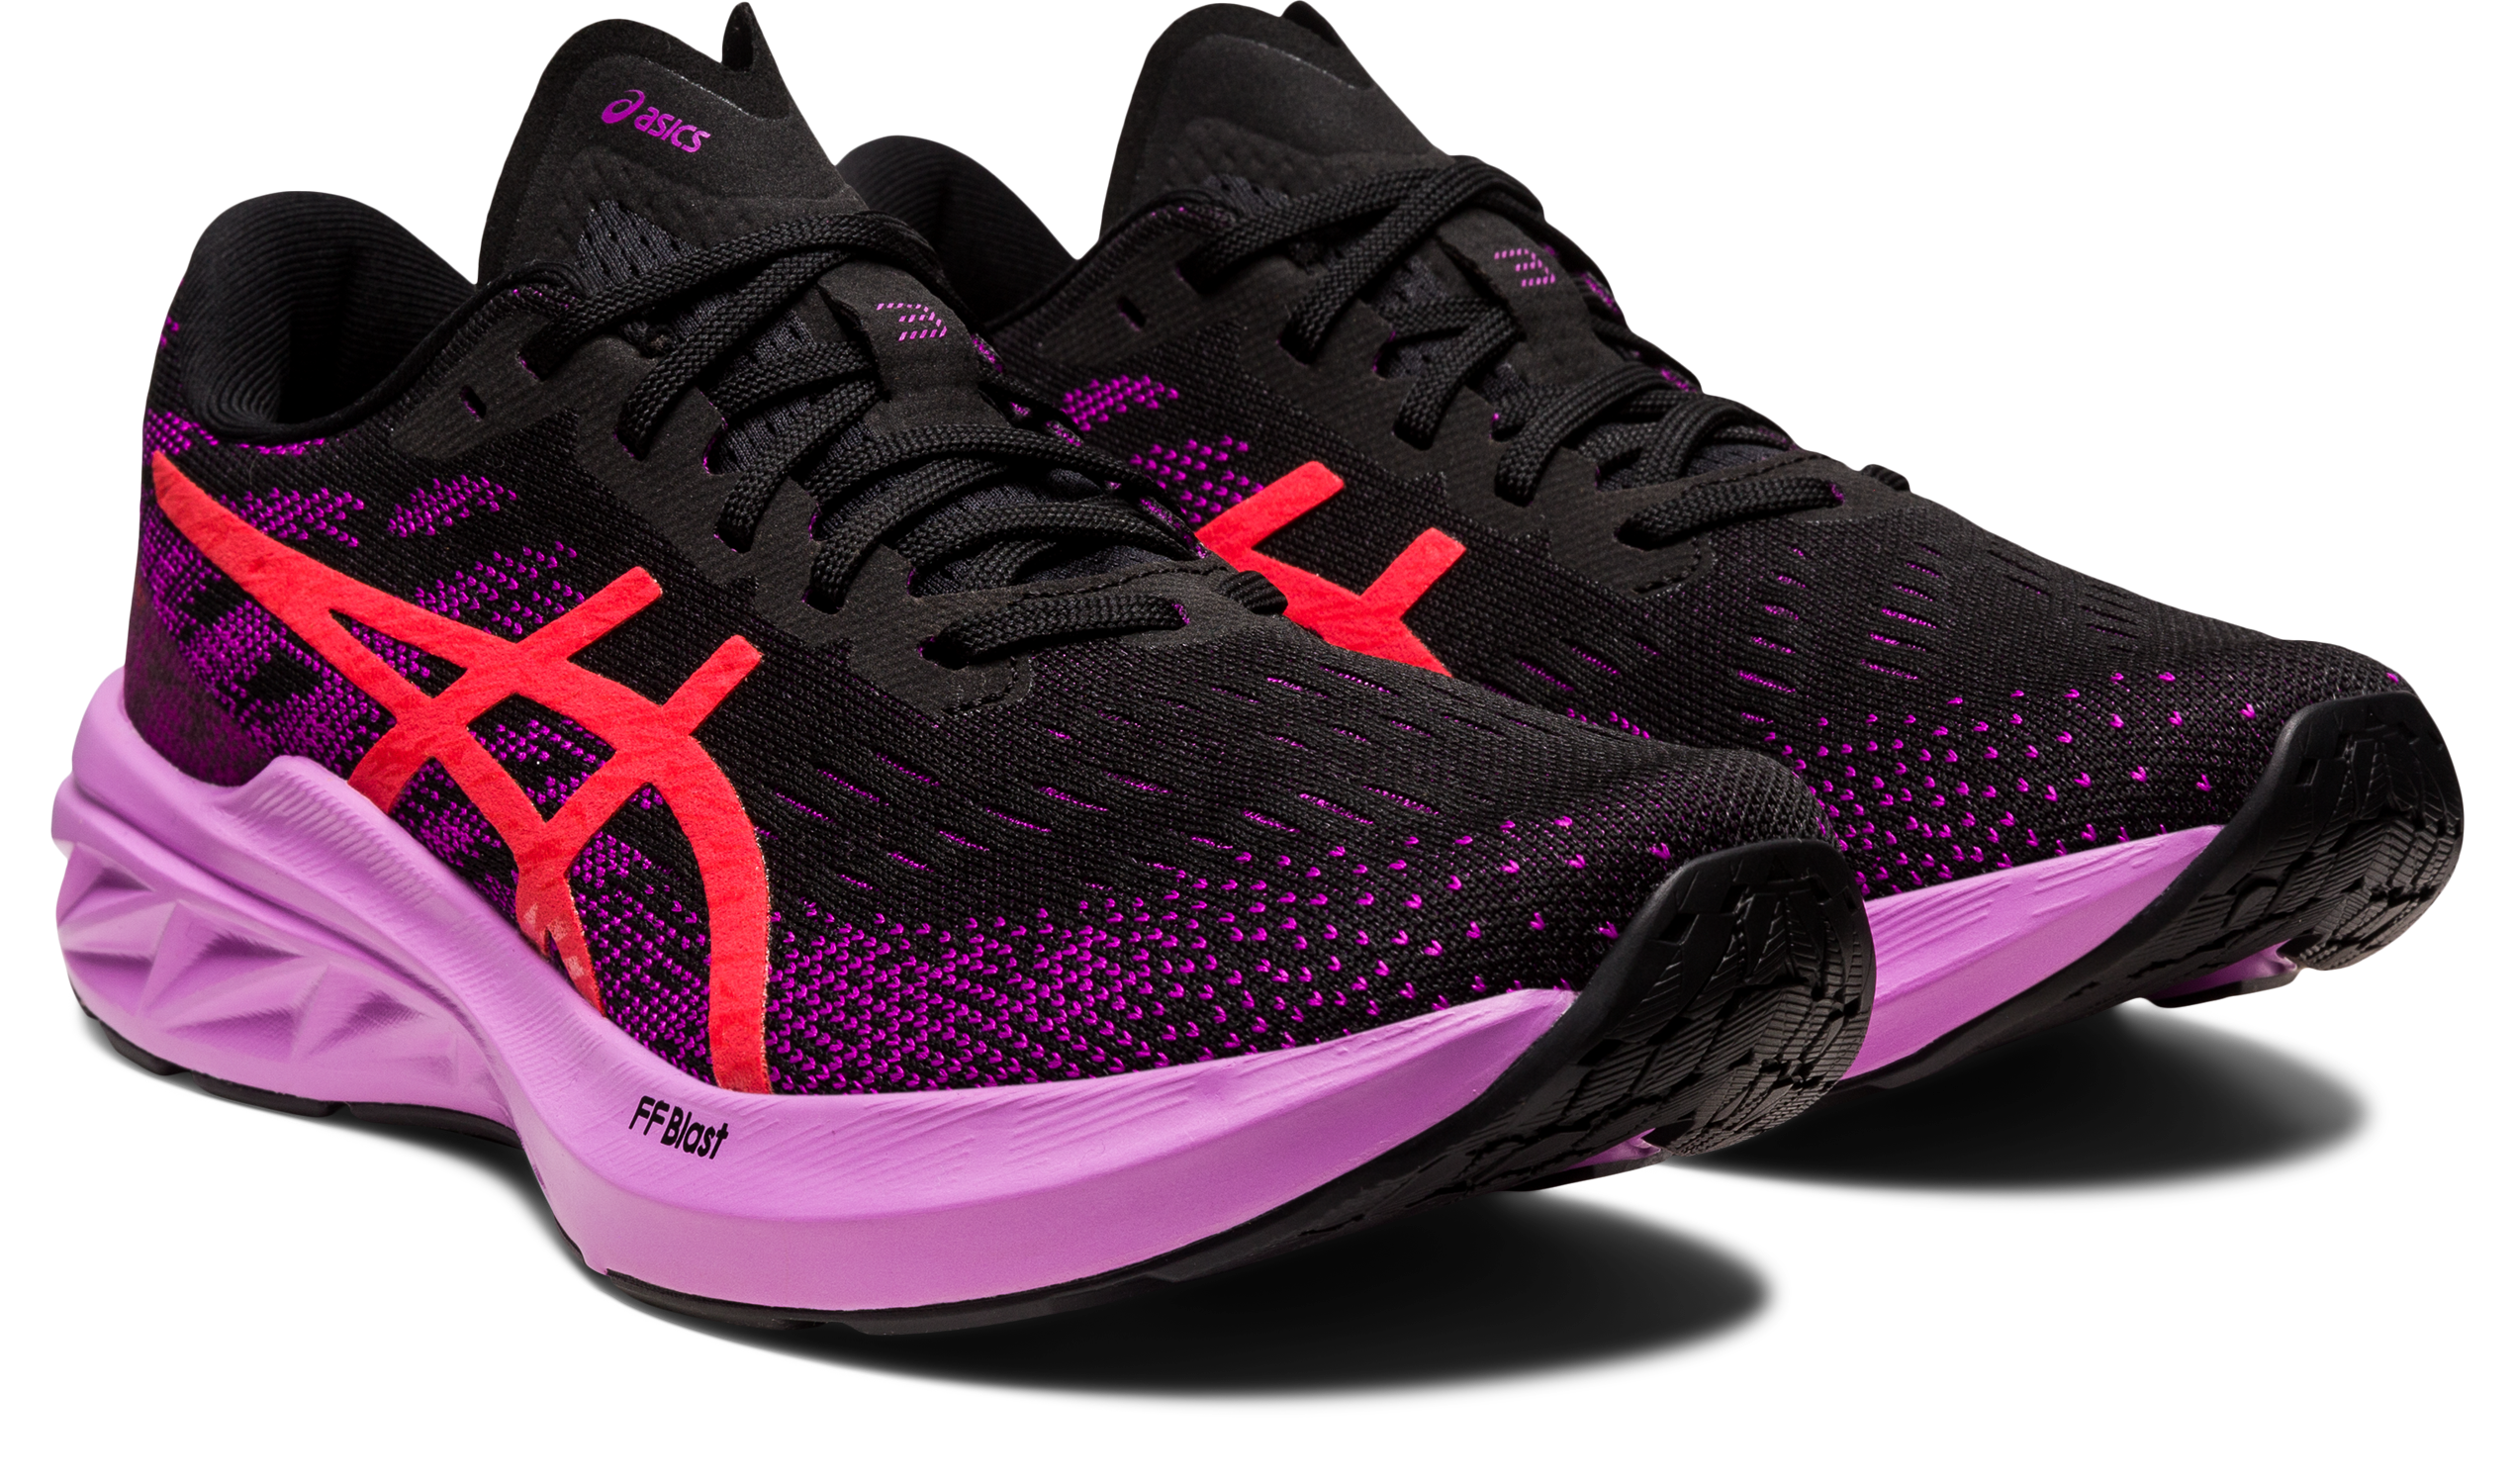 Asics Women's Dynablast 3 Running Shoes in Black/Red Alert